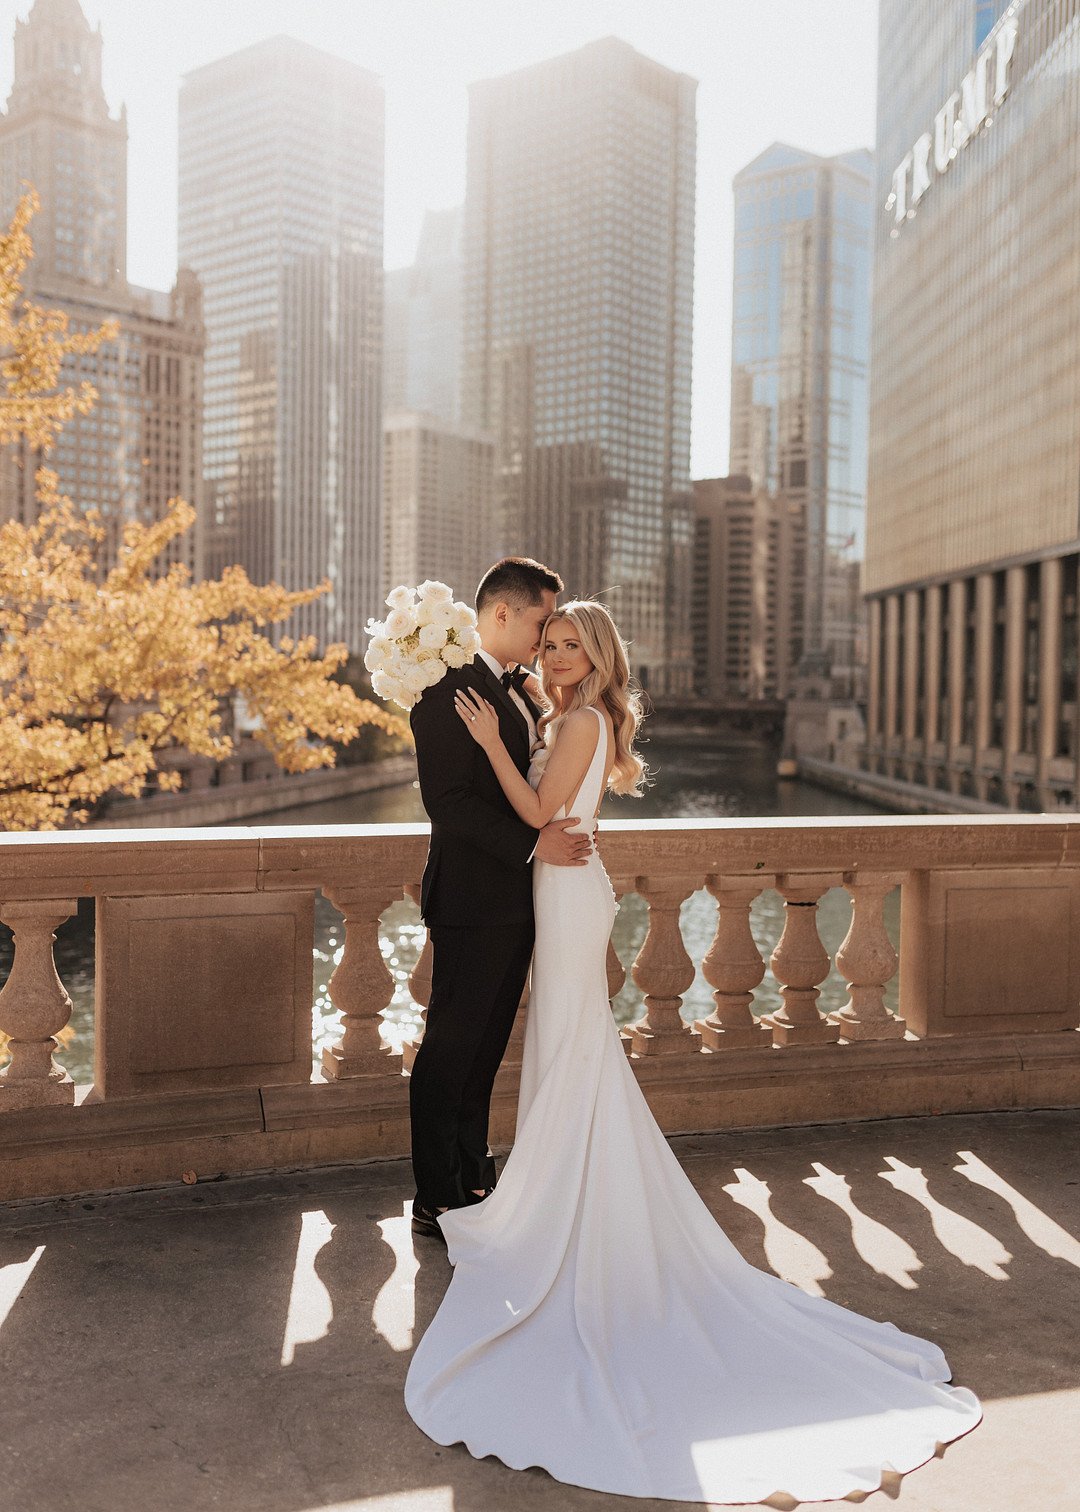 Wigal_Wigal_Nicole Ryann Photography_Intimate Chicago Rooftop Wedding - Nicole Ryann Photography-571_low.jpg